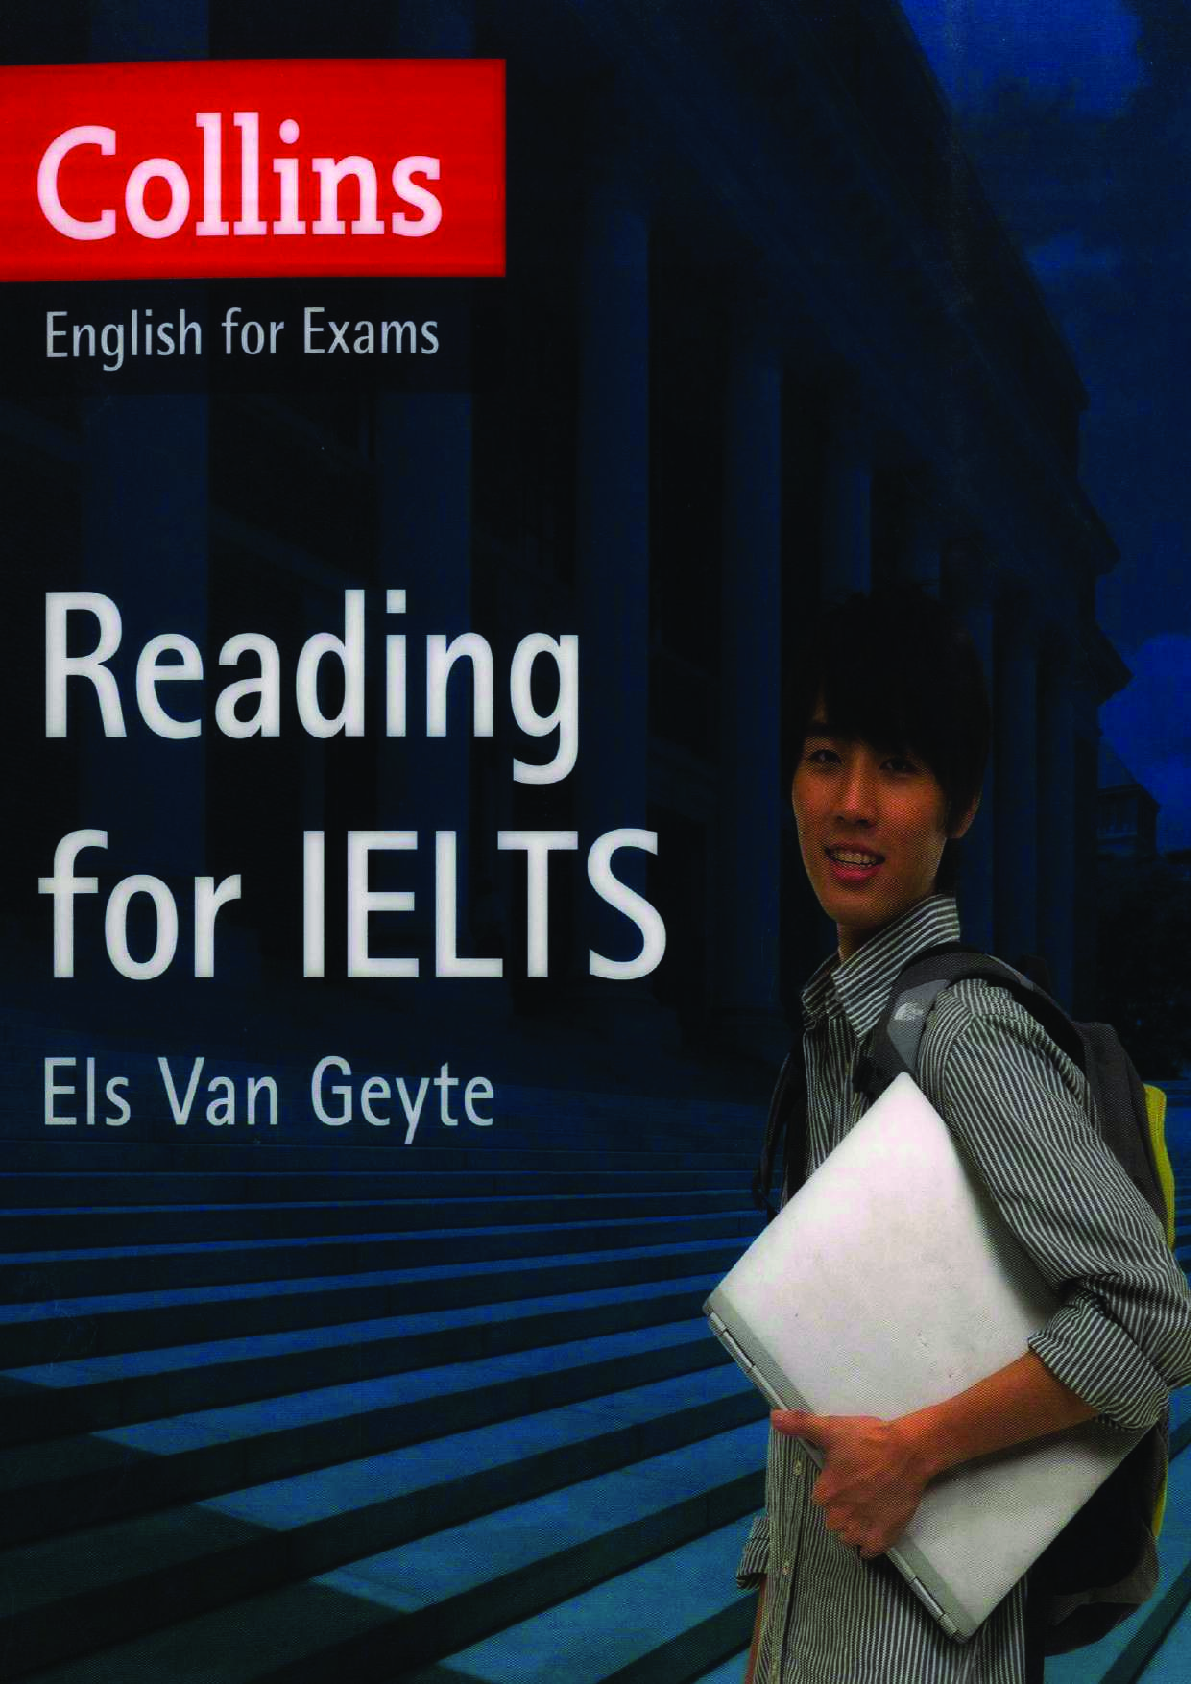 Sách Collins Reading for IELTS pdf | Xem online, tải PDF miễn phí (trang 1)